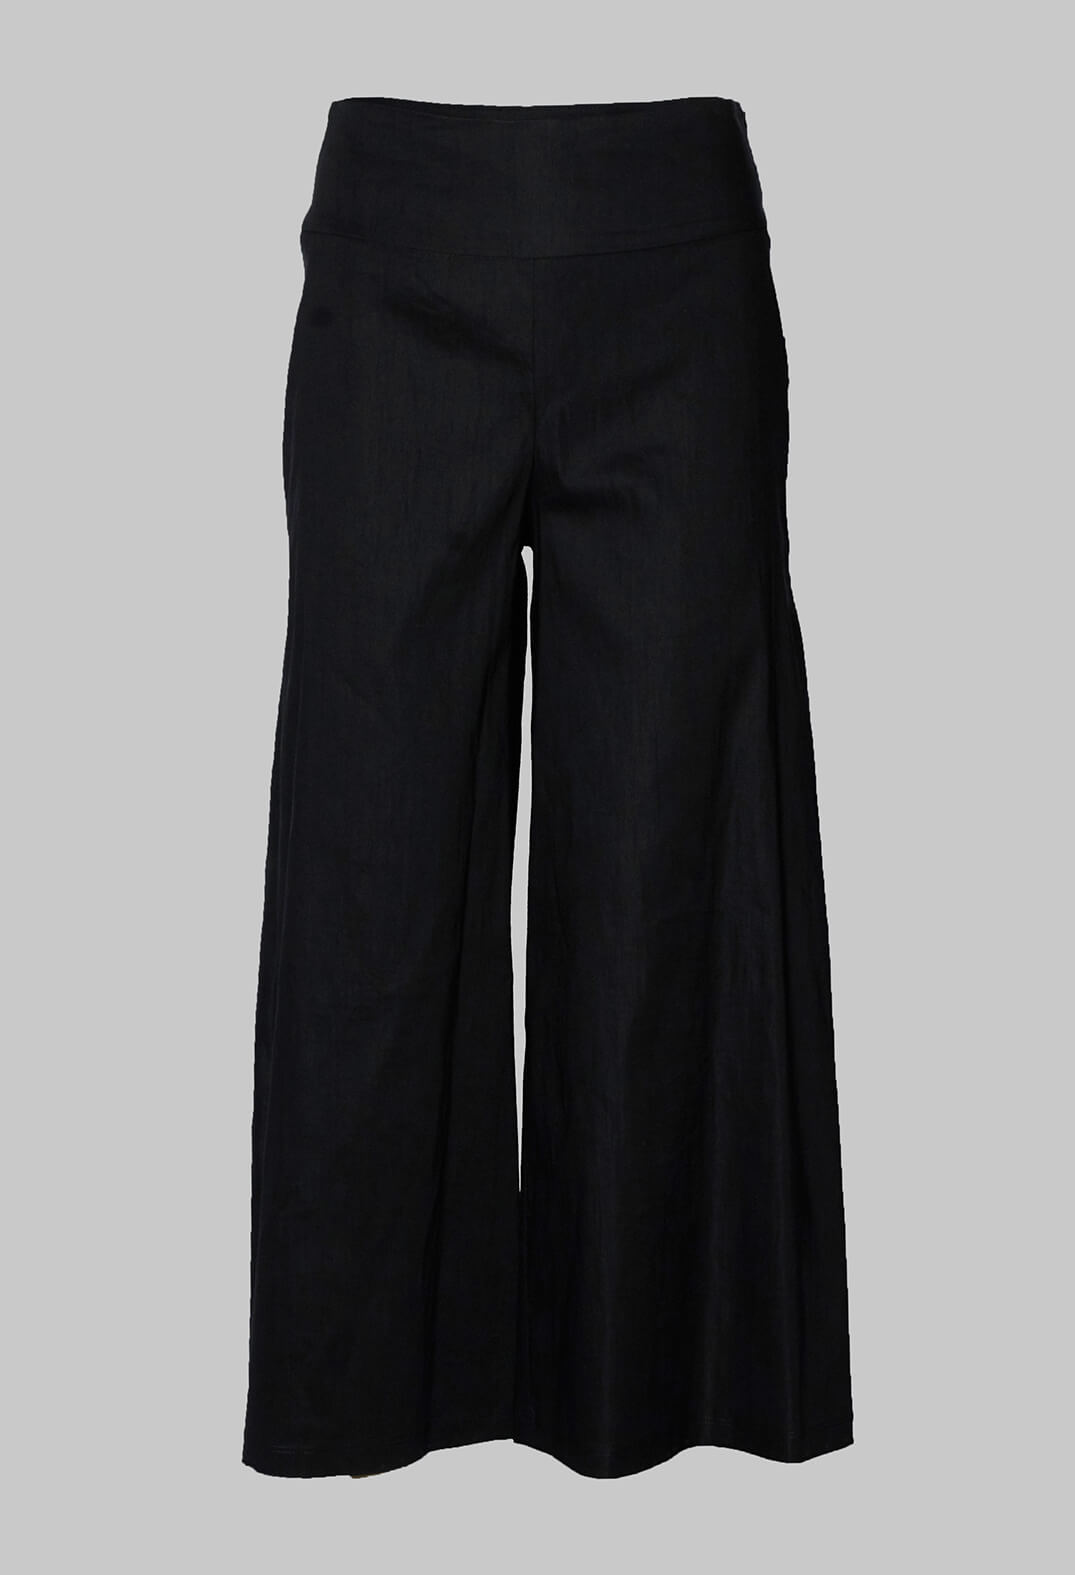 Bottega Veneta® Women's Grain De Poudre Culotte Trousers in Black. Shop  online now.